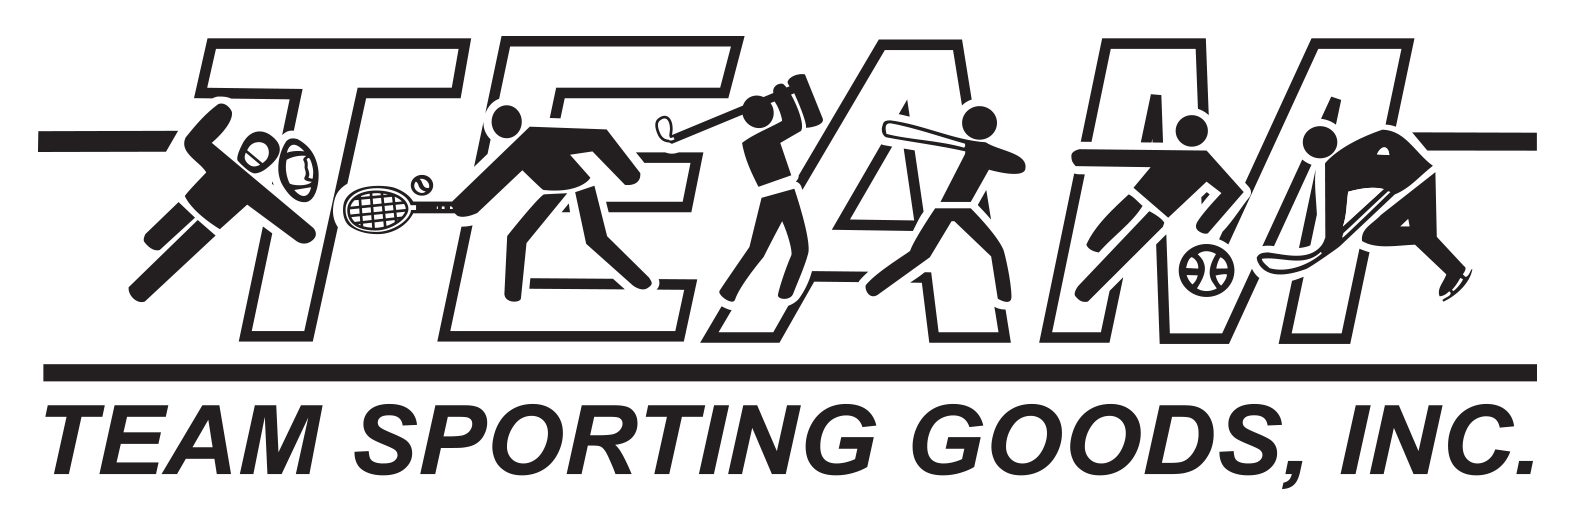 Team Sporting Goods Inc.